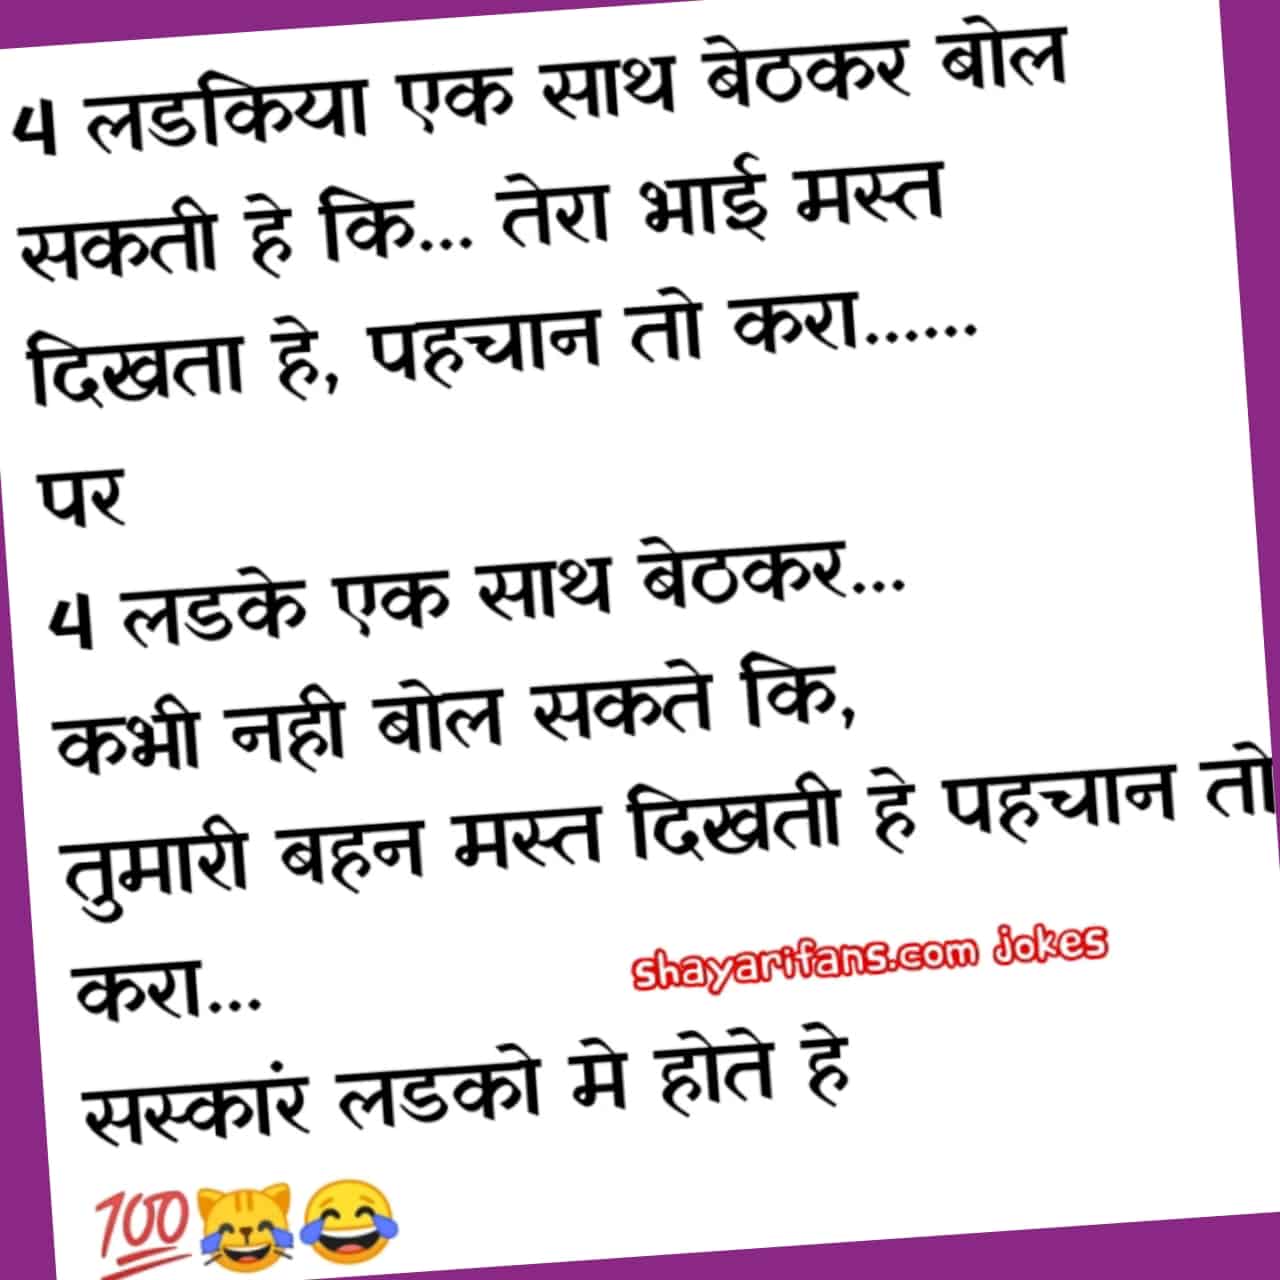 Jokes in hindi for whatsapp, jokes, santa banta jokes - Instagram ...